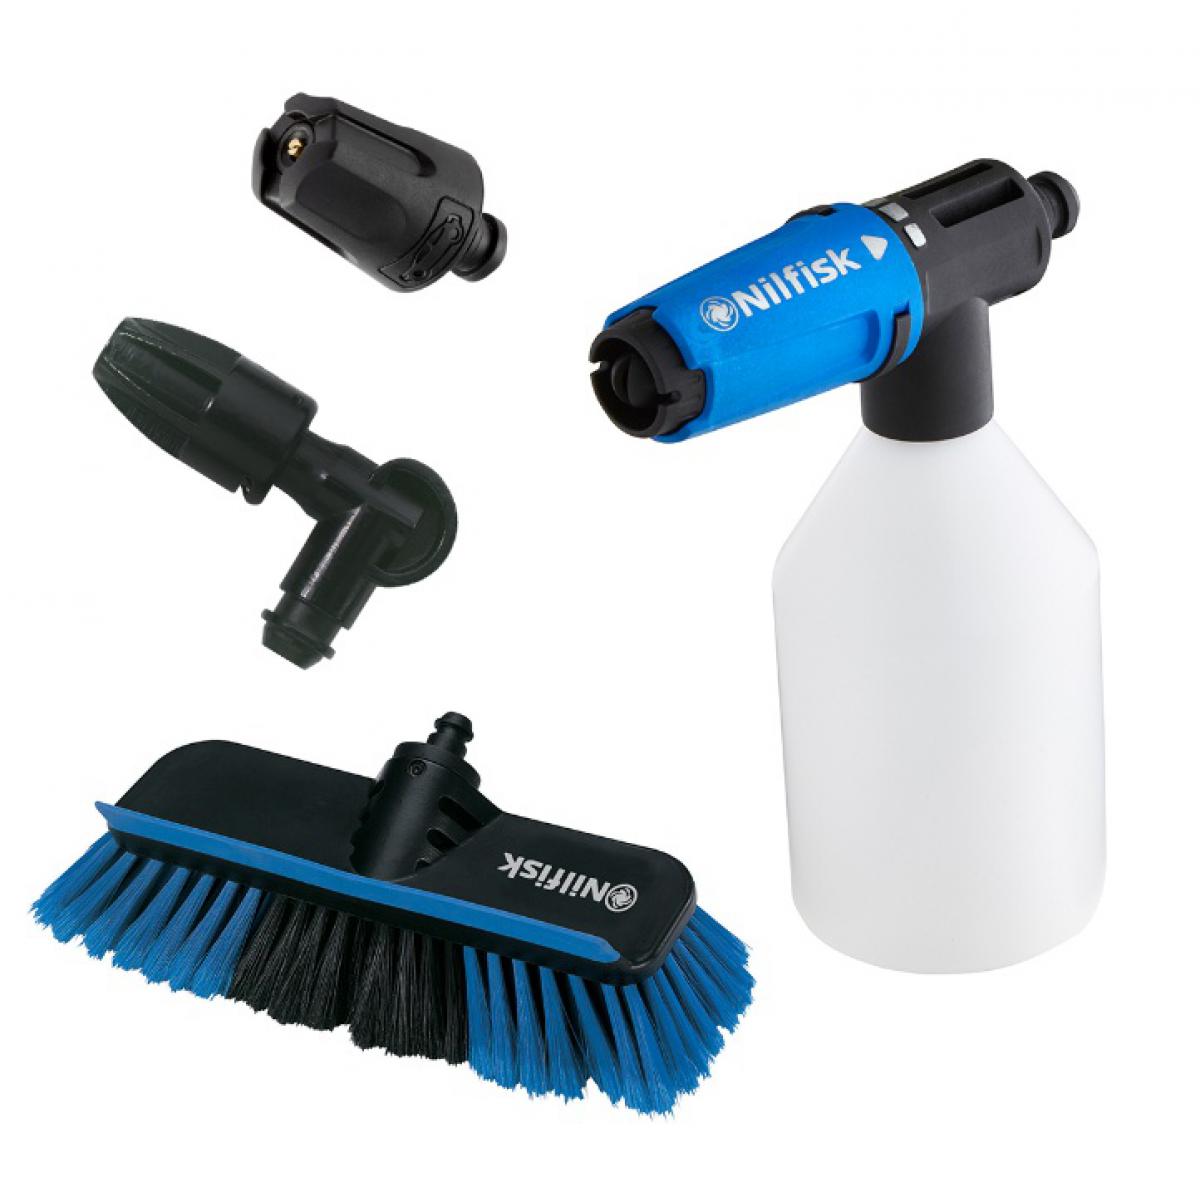 Nilfisk - Nilfisk - Kit accessoires nettoyage voiture - Nettoyeurs haute pression